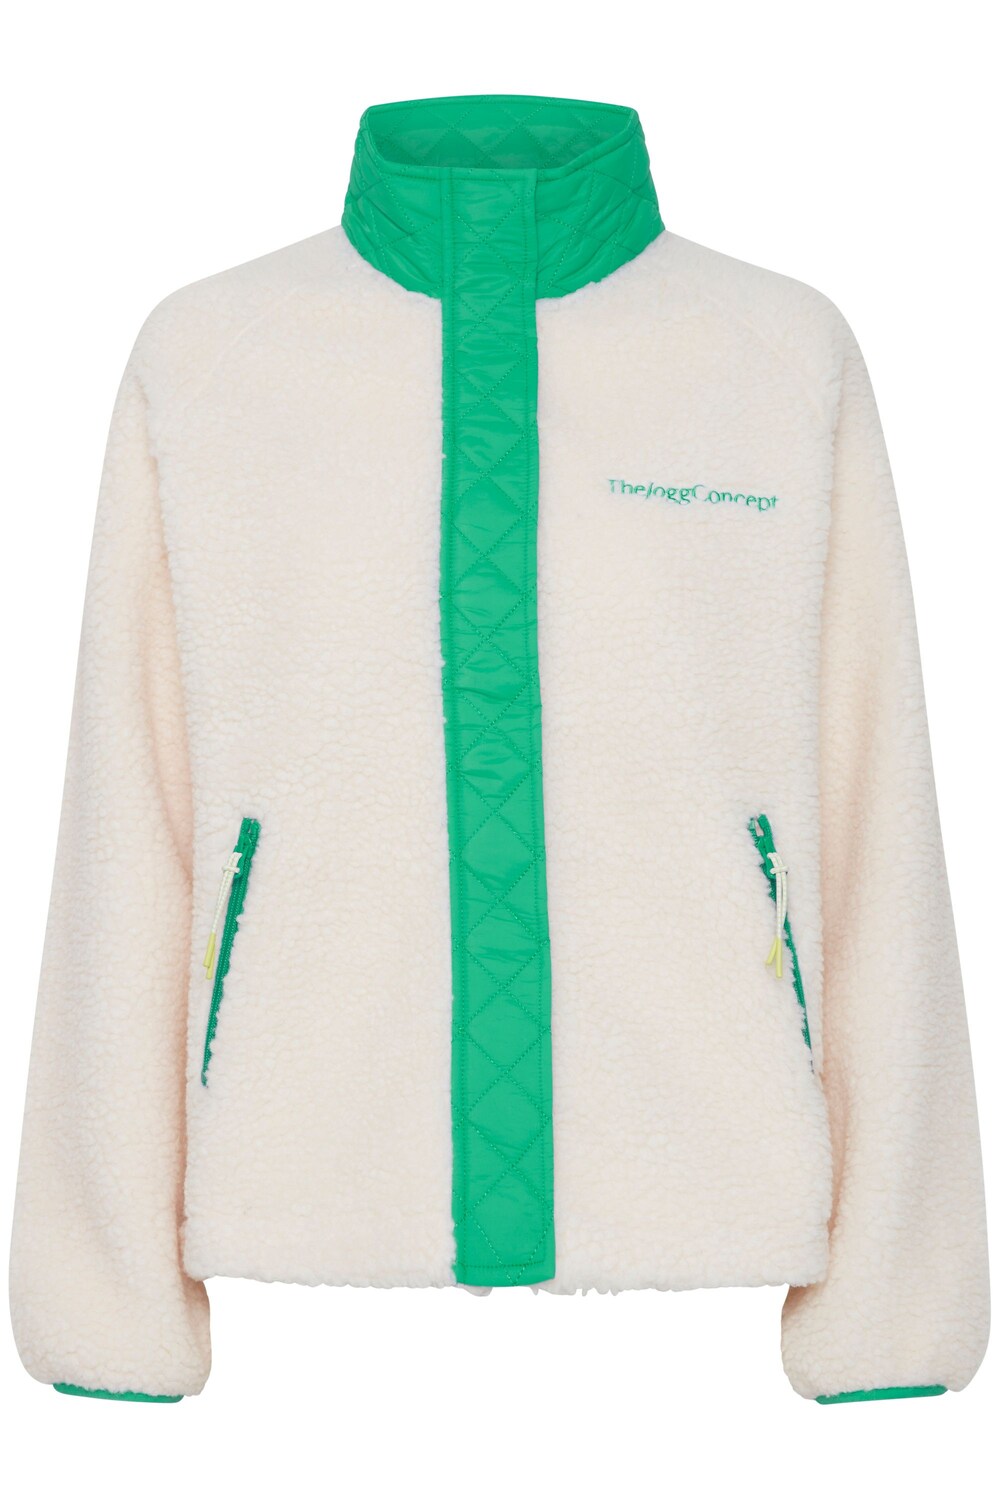 Межсезонная куртка The Jogg Concept Jcberri Raglan, зеленый